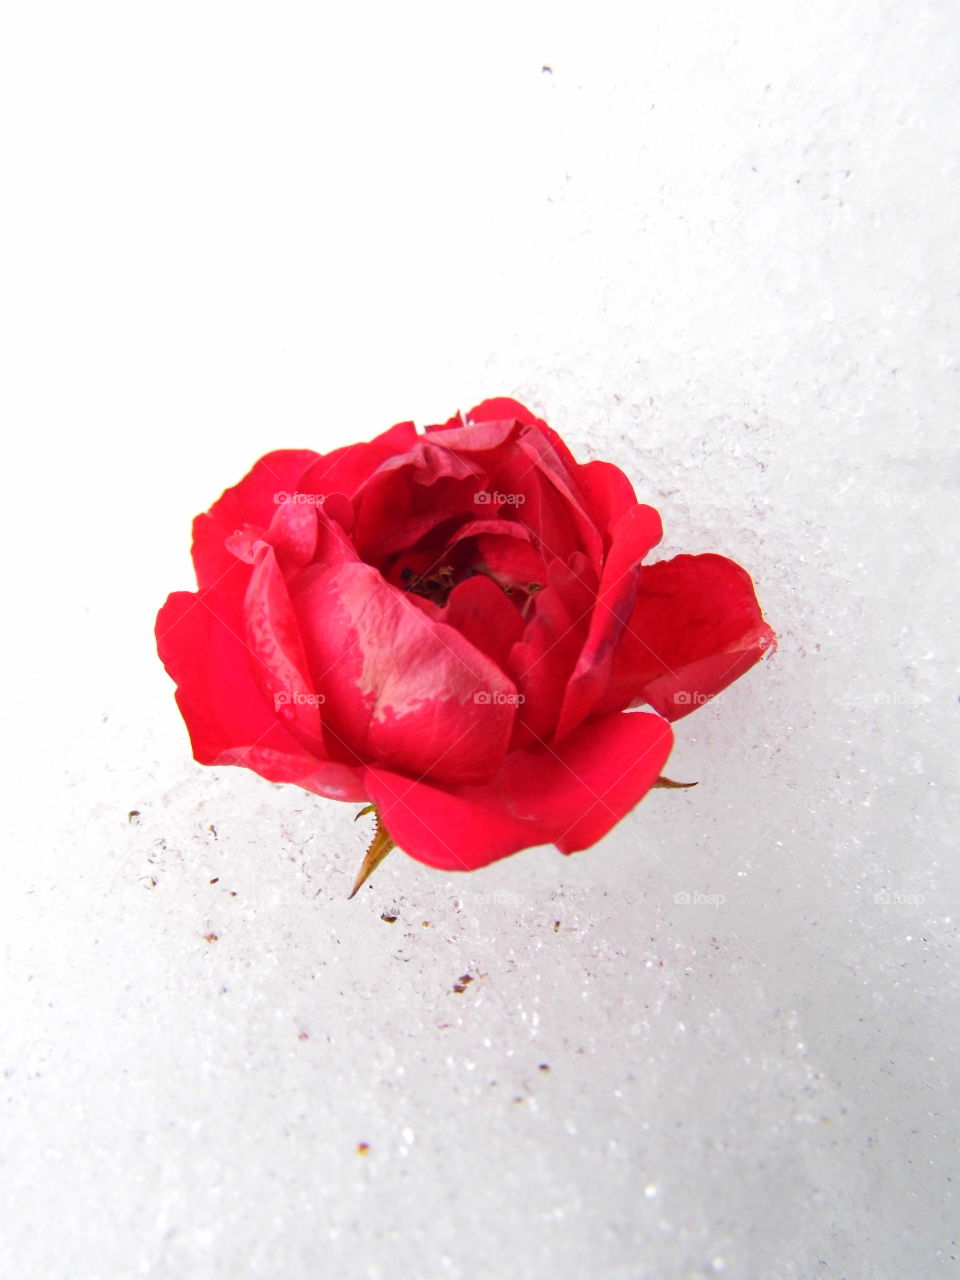 red rose flower on Snow White